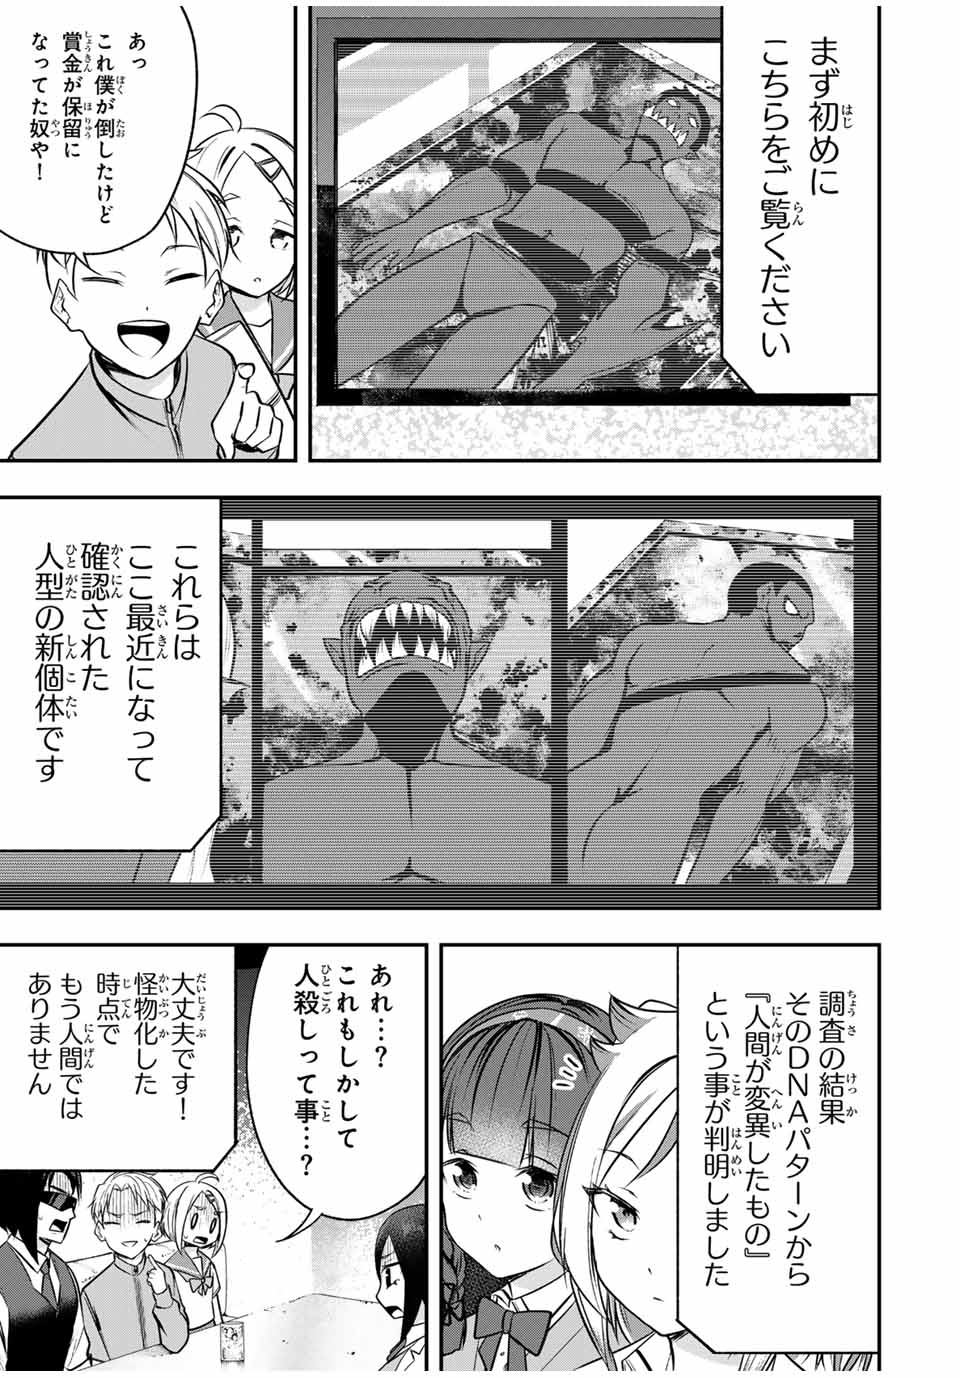 Heroine wa xx Okasegitai - Chapter 12 - Page 13